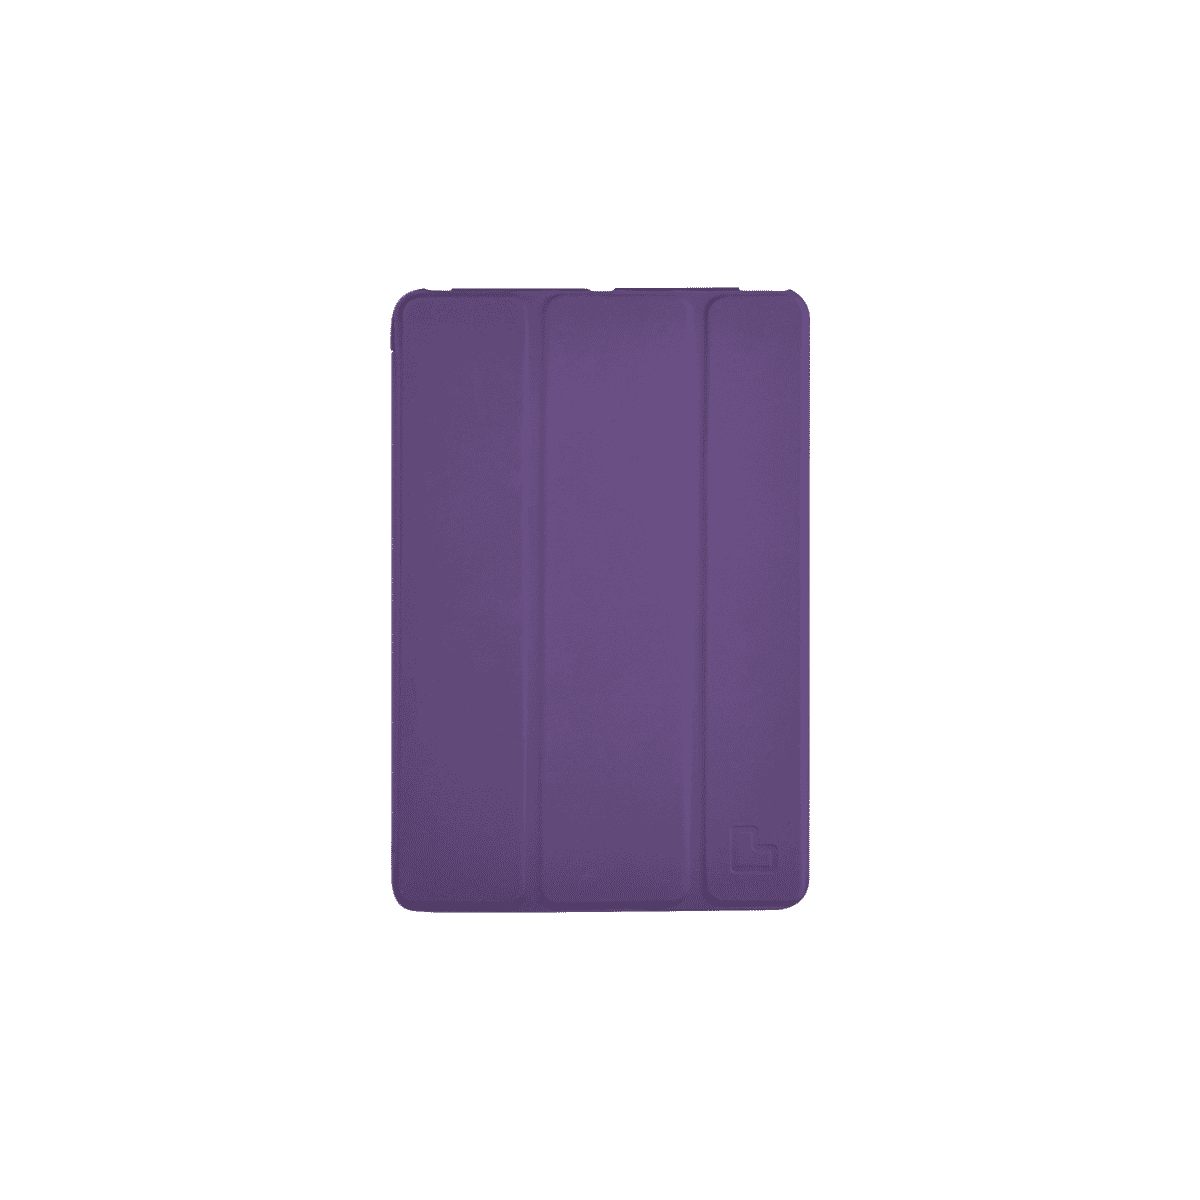 LINDEN LIMSCP16 iPad mini 1/2/3 Snap Folio - Purple at The Good Guys